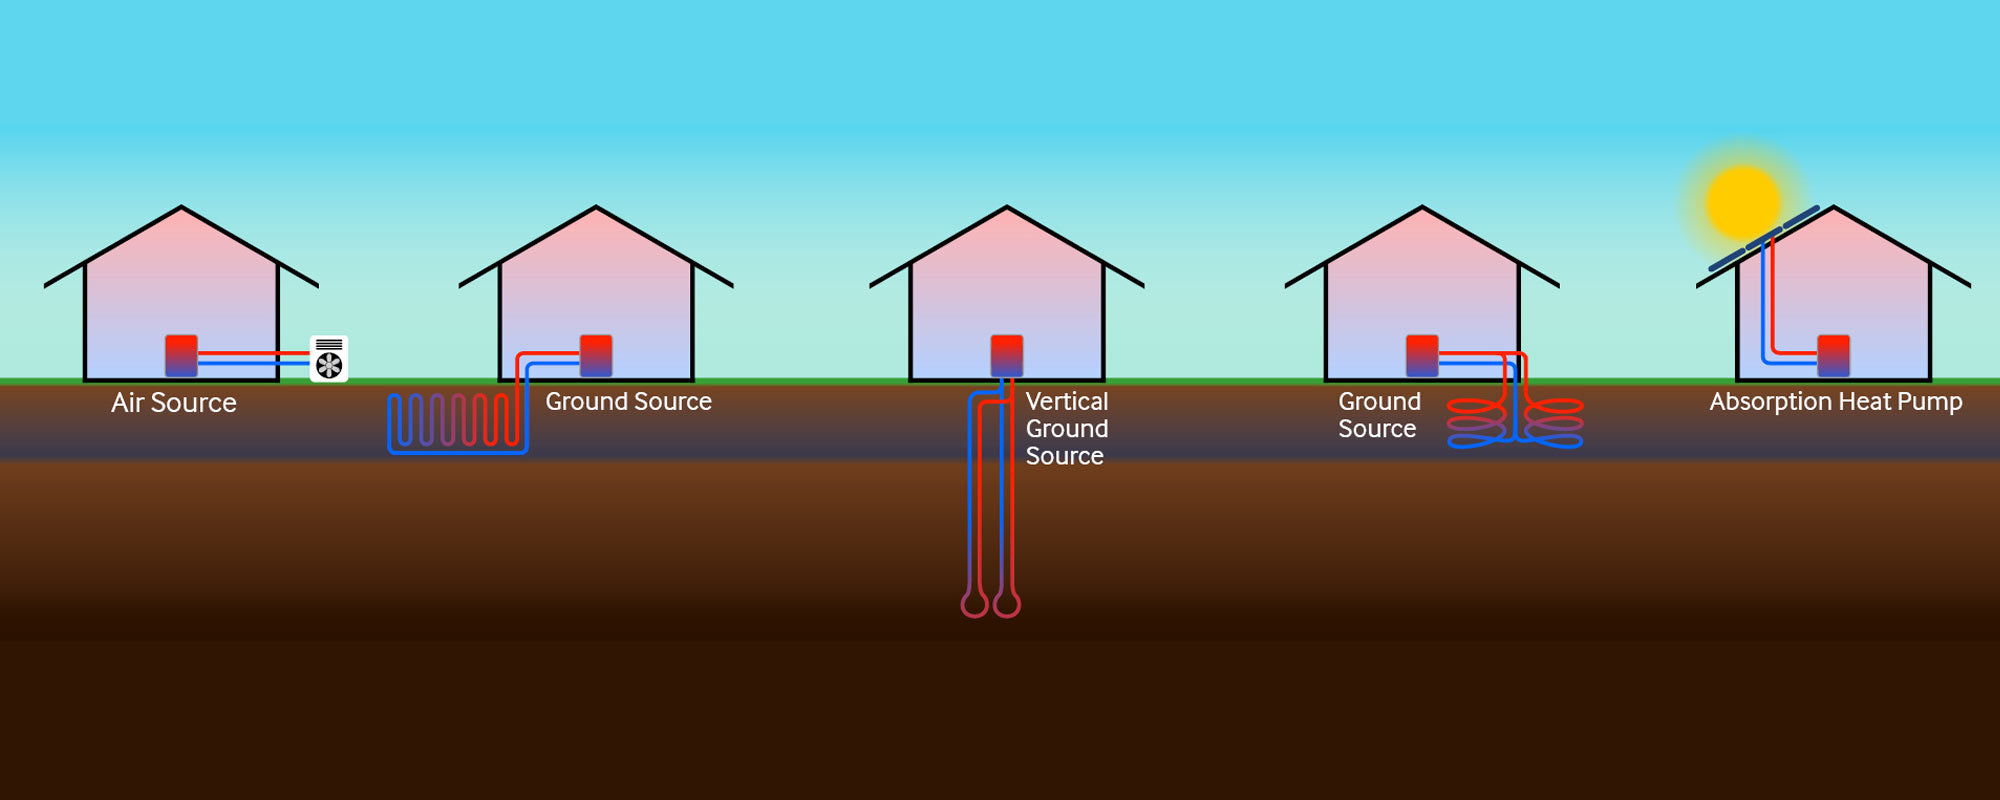 different types of heat pumps illustration